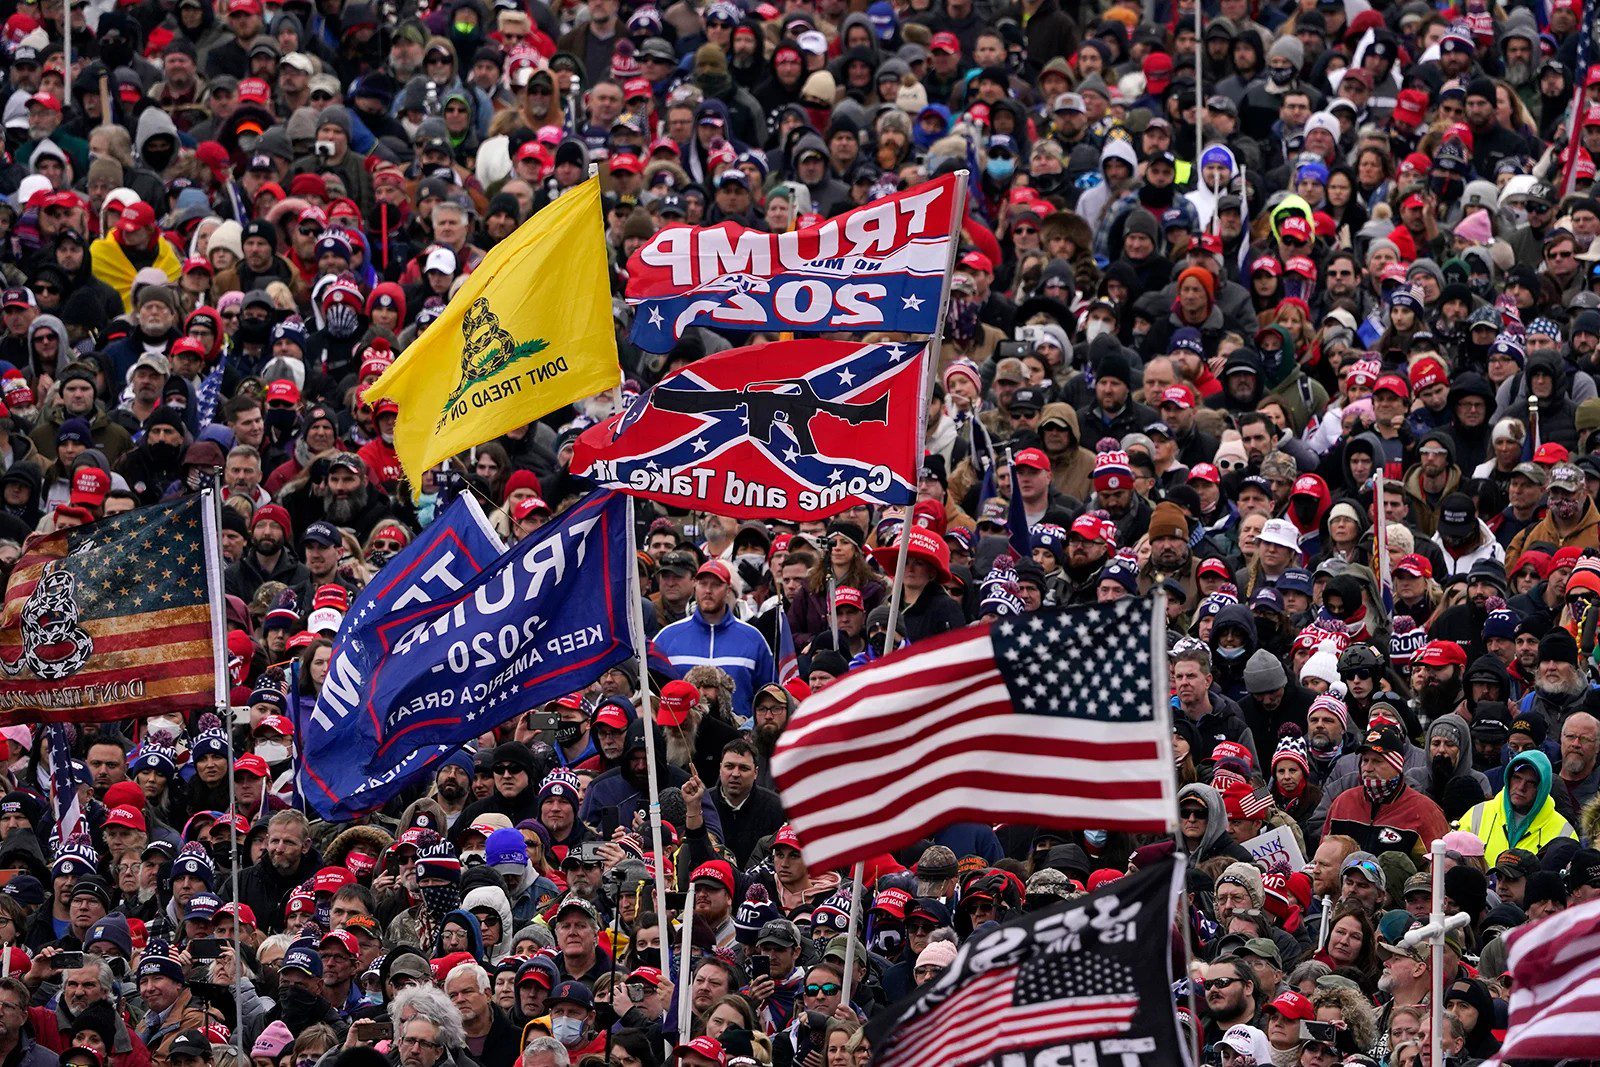 A pro-Trump rally in Washington